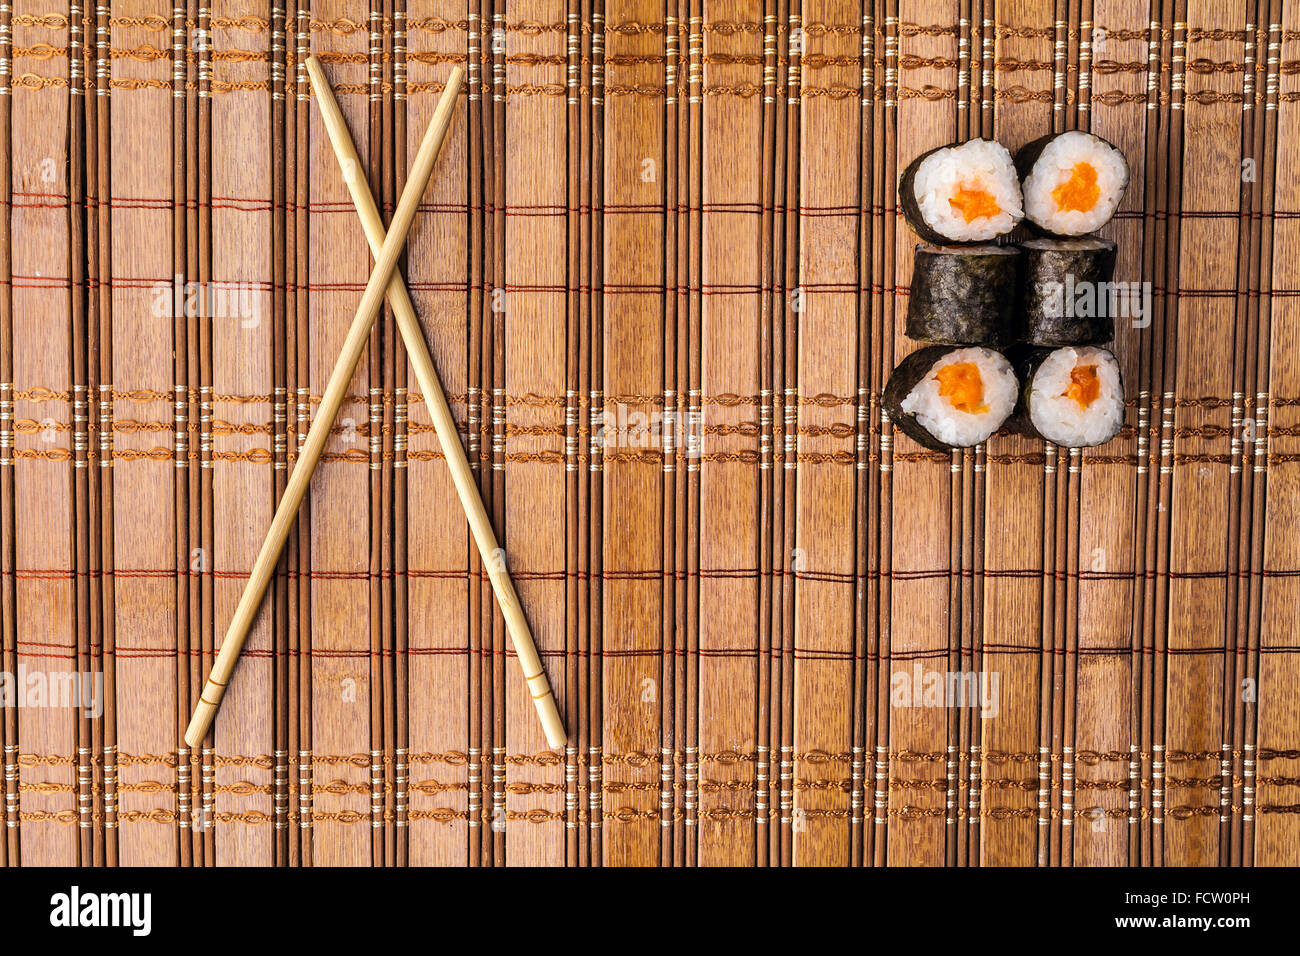 https://c8.alamy.com/comp/FCW0PH/chopsticks-and-sushi-roll-on-bamboo-mat-background-menu-FCW0PH.jpg